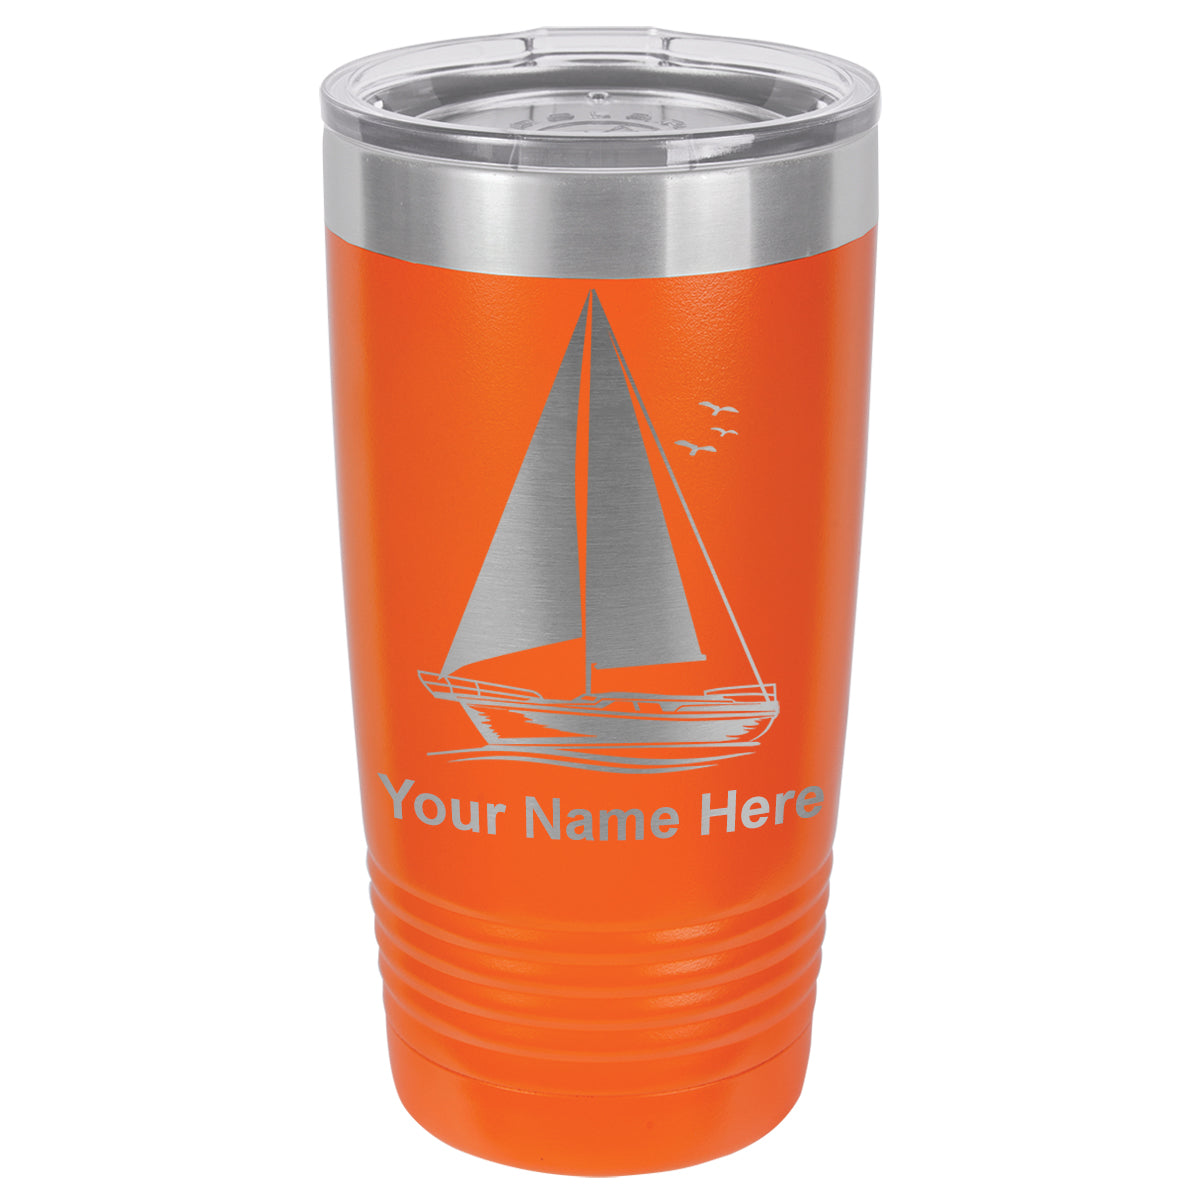 20oz Vacuum Insulated Tumbler Mug, Sailboat, Personalized Engraving Included